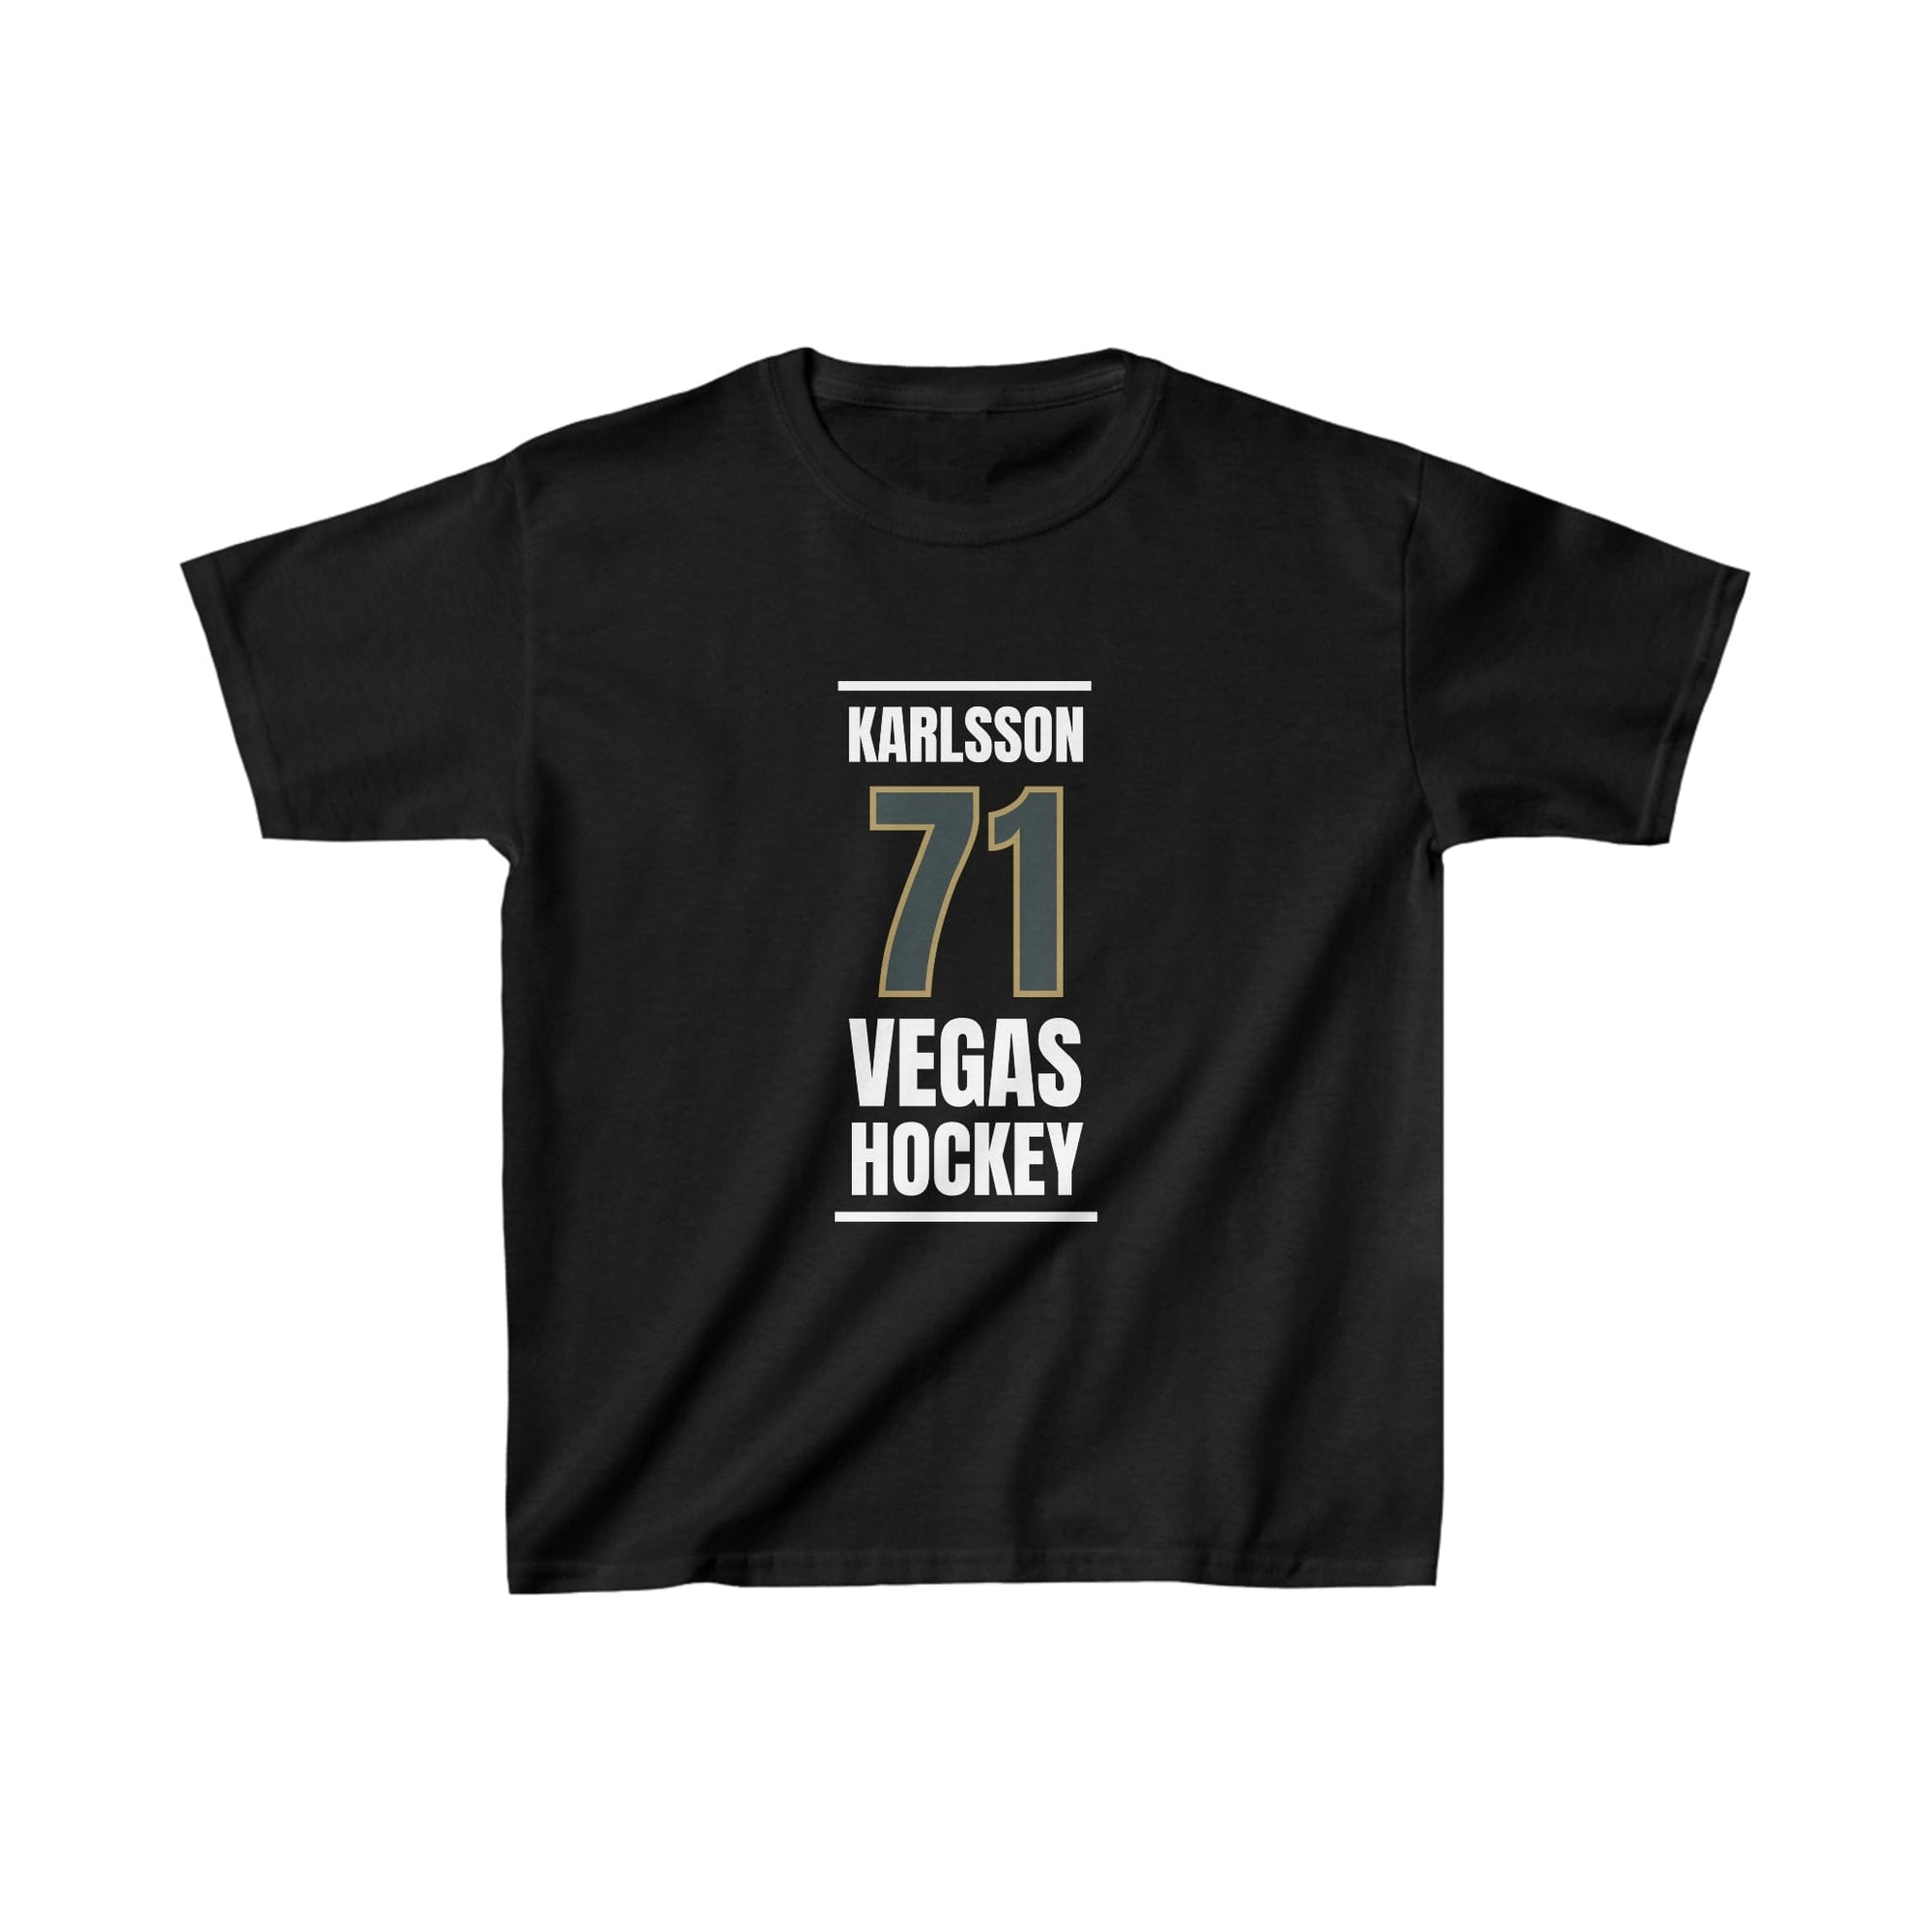 Kids clothes Karlsson 71 Vegas Hockey Steel Gray Vertical Design Kids Tee